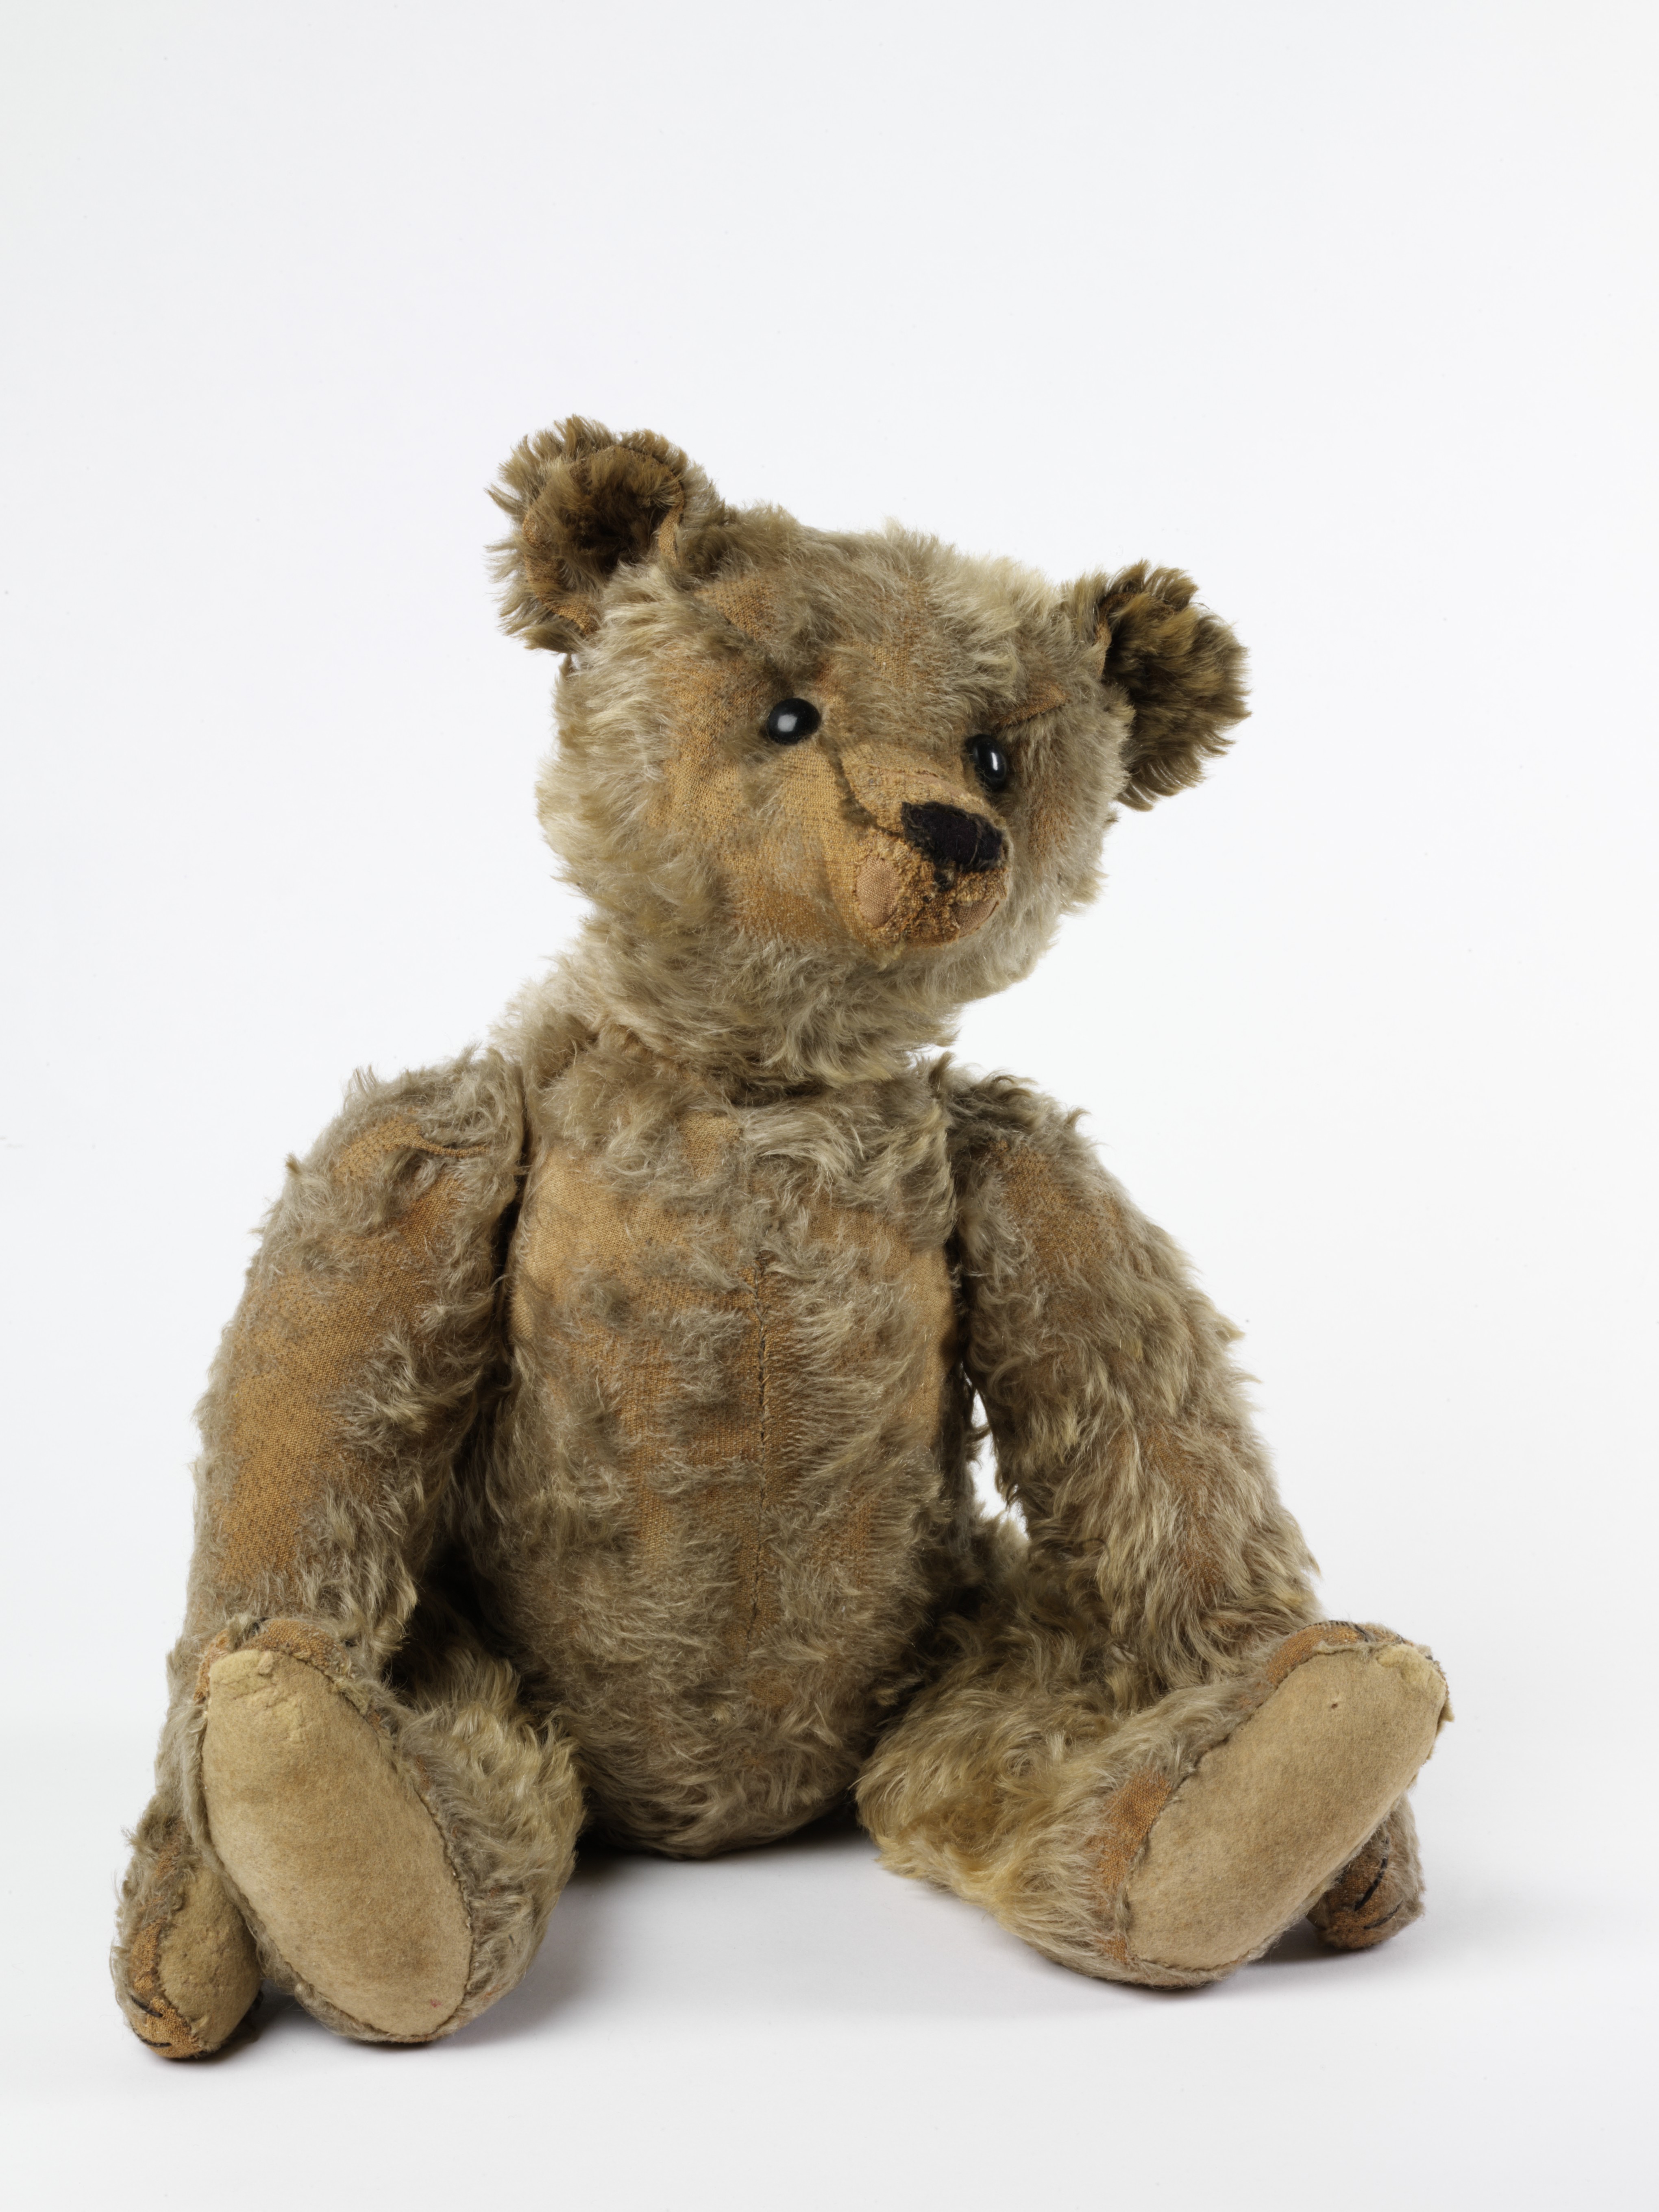 Teddy Bears Picnic anyone? – In Maidstone